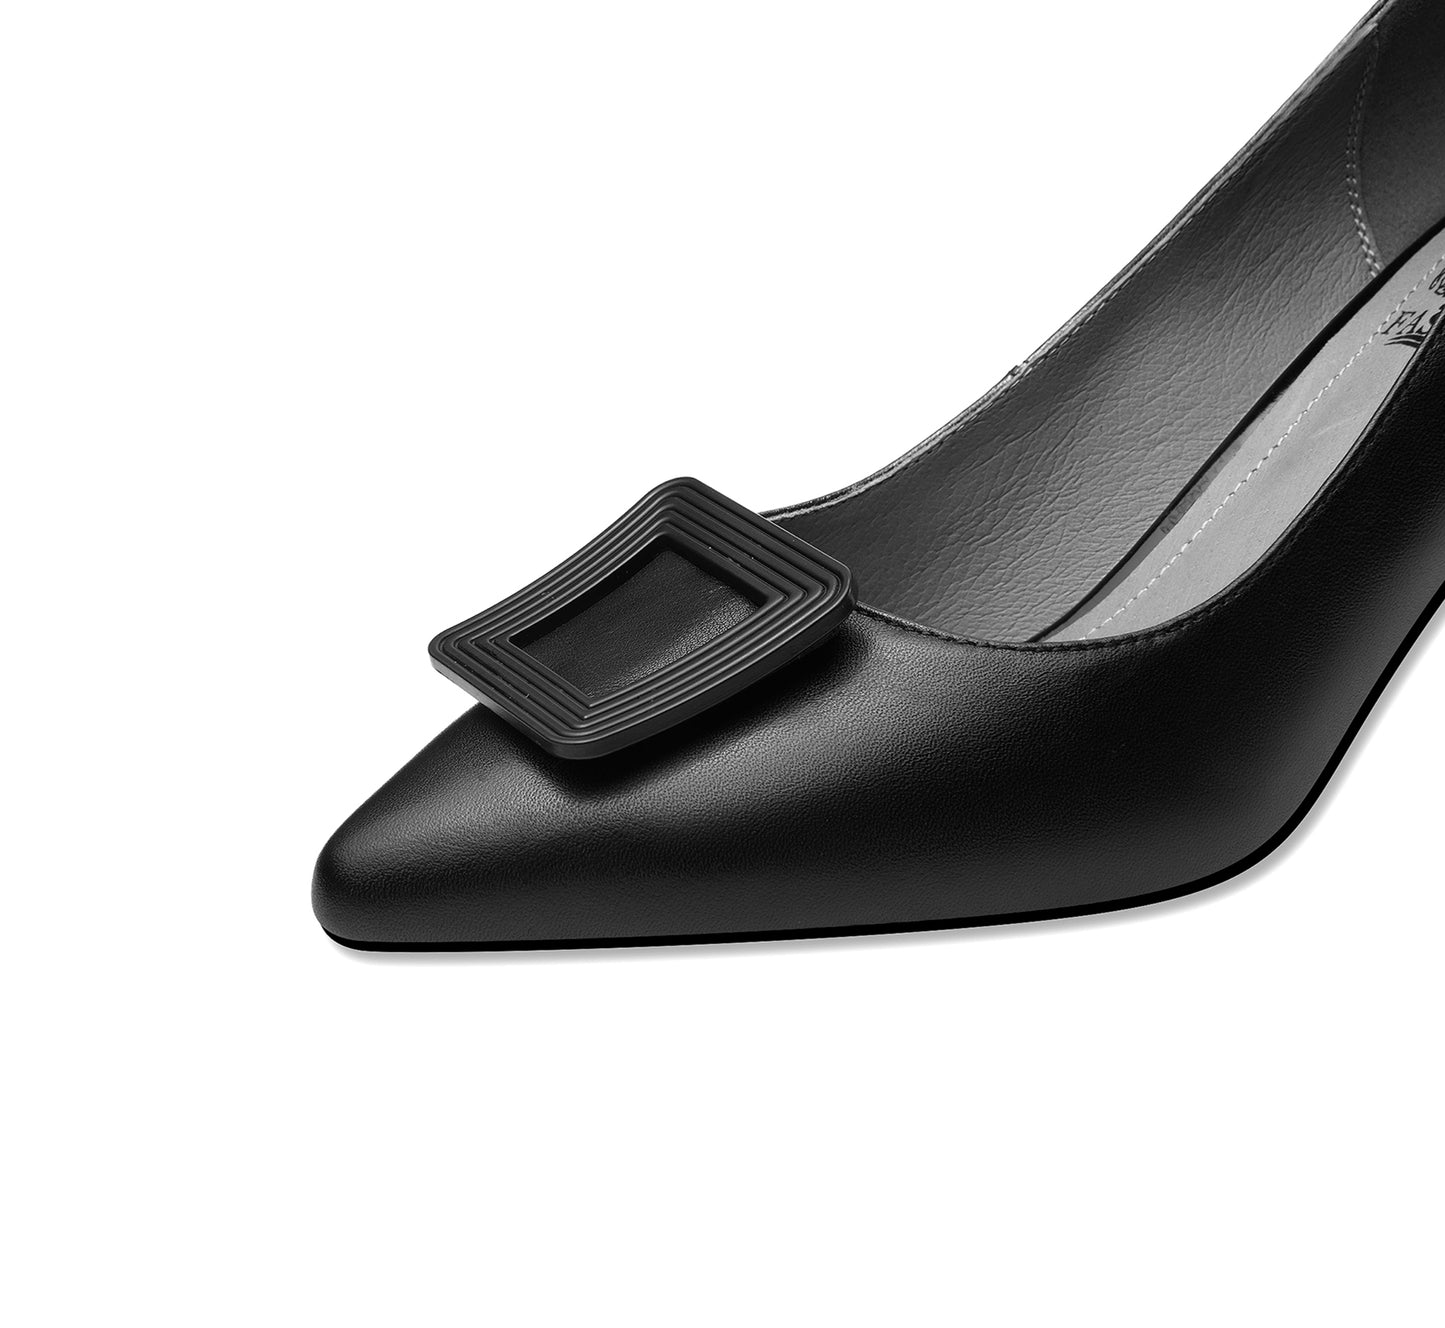 TinaCus Women's Pointed Toe Genuine Leather Handmade Kitten Heel Slip On Graceful Pumps Shoes